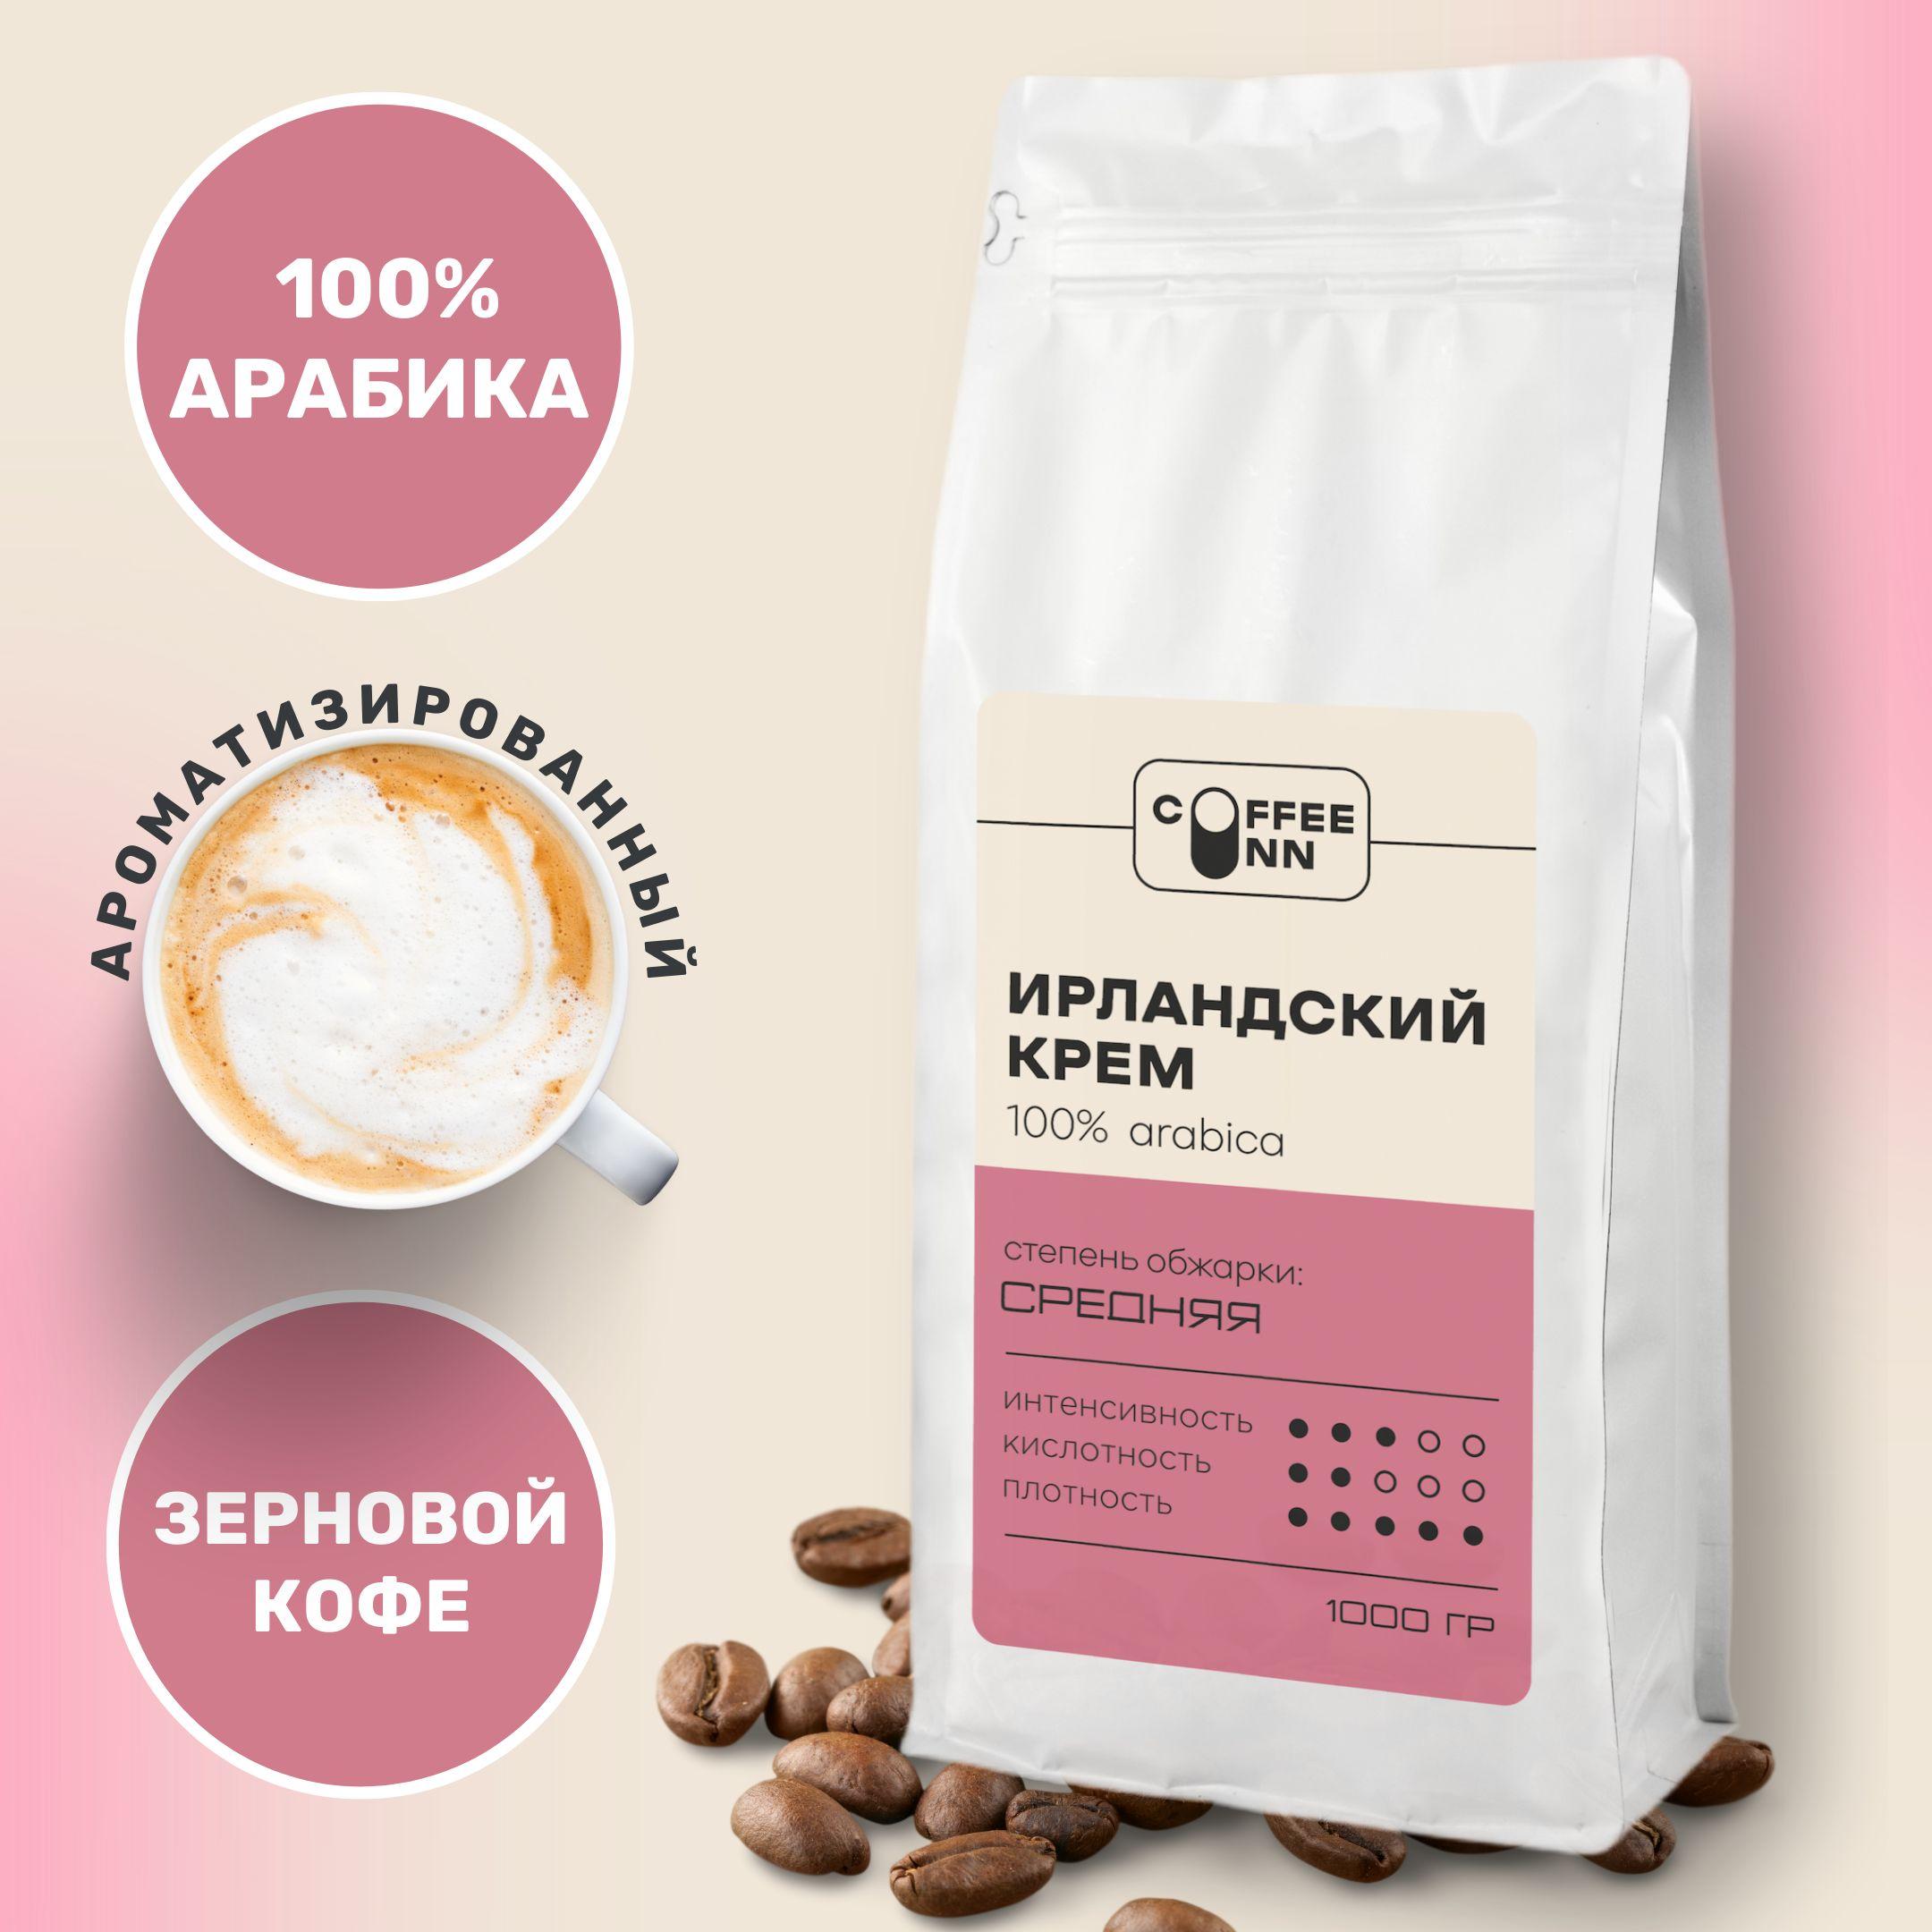 COFFEE INN | Кофе в зернах 1 кг ИРЛАНДСКИЙ КРЕМ 100% арабика свежая обжарка СOFFEE INN Arabica/ароматизированный